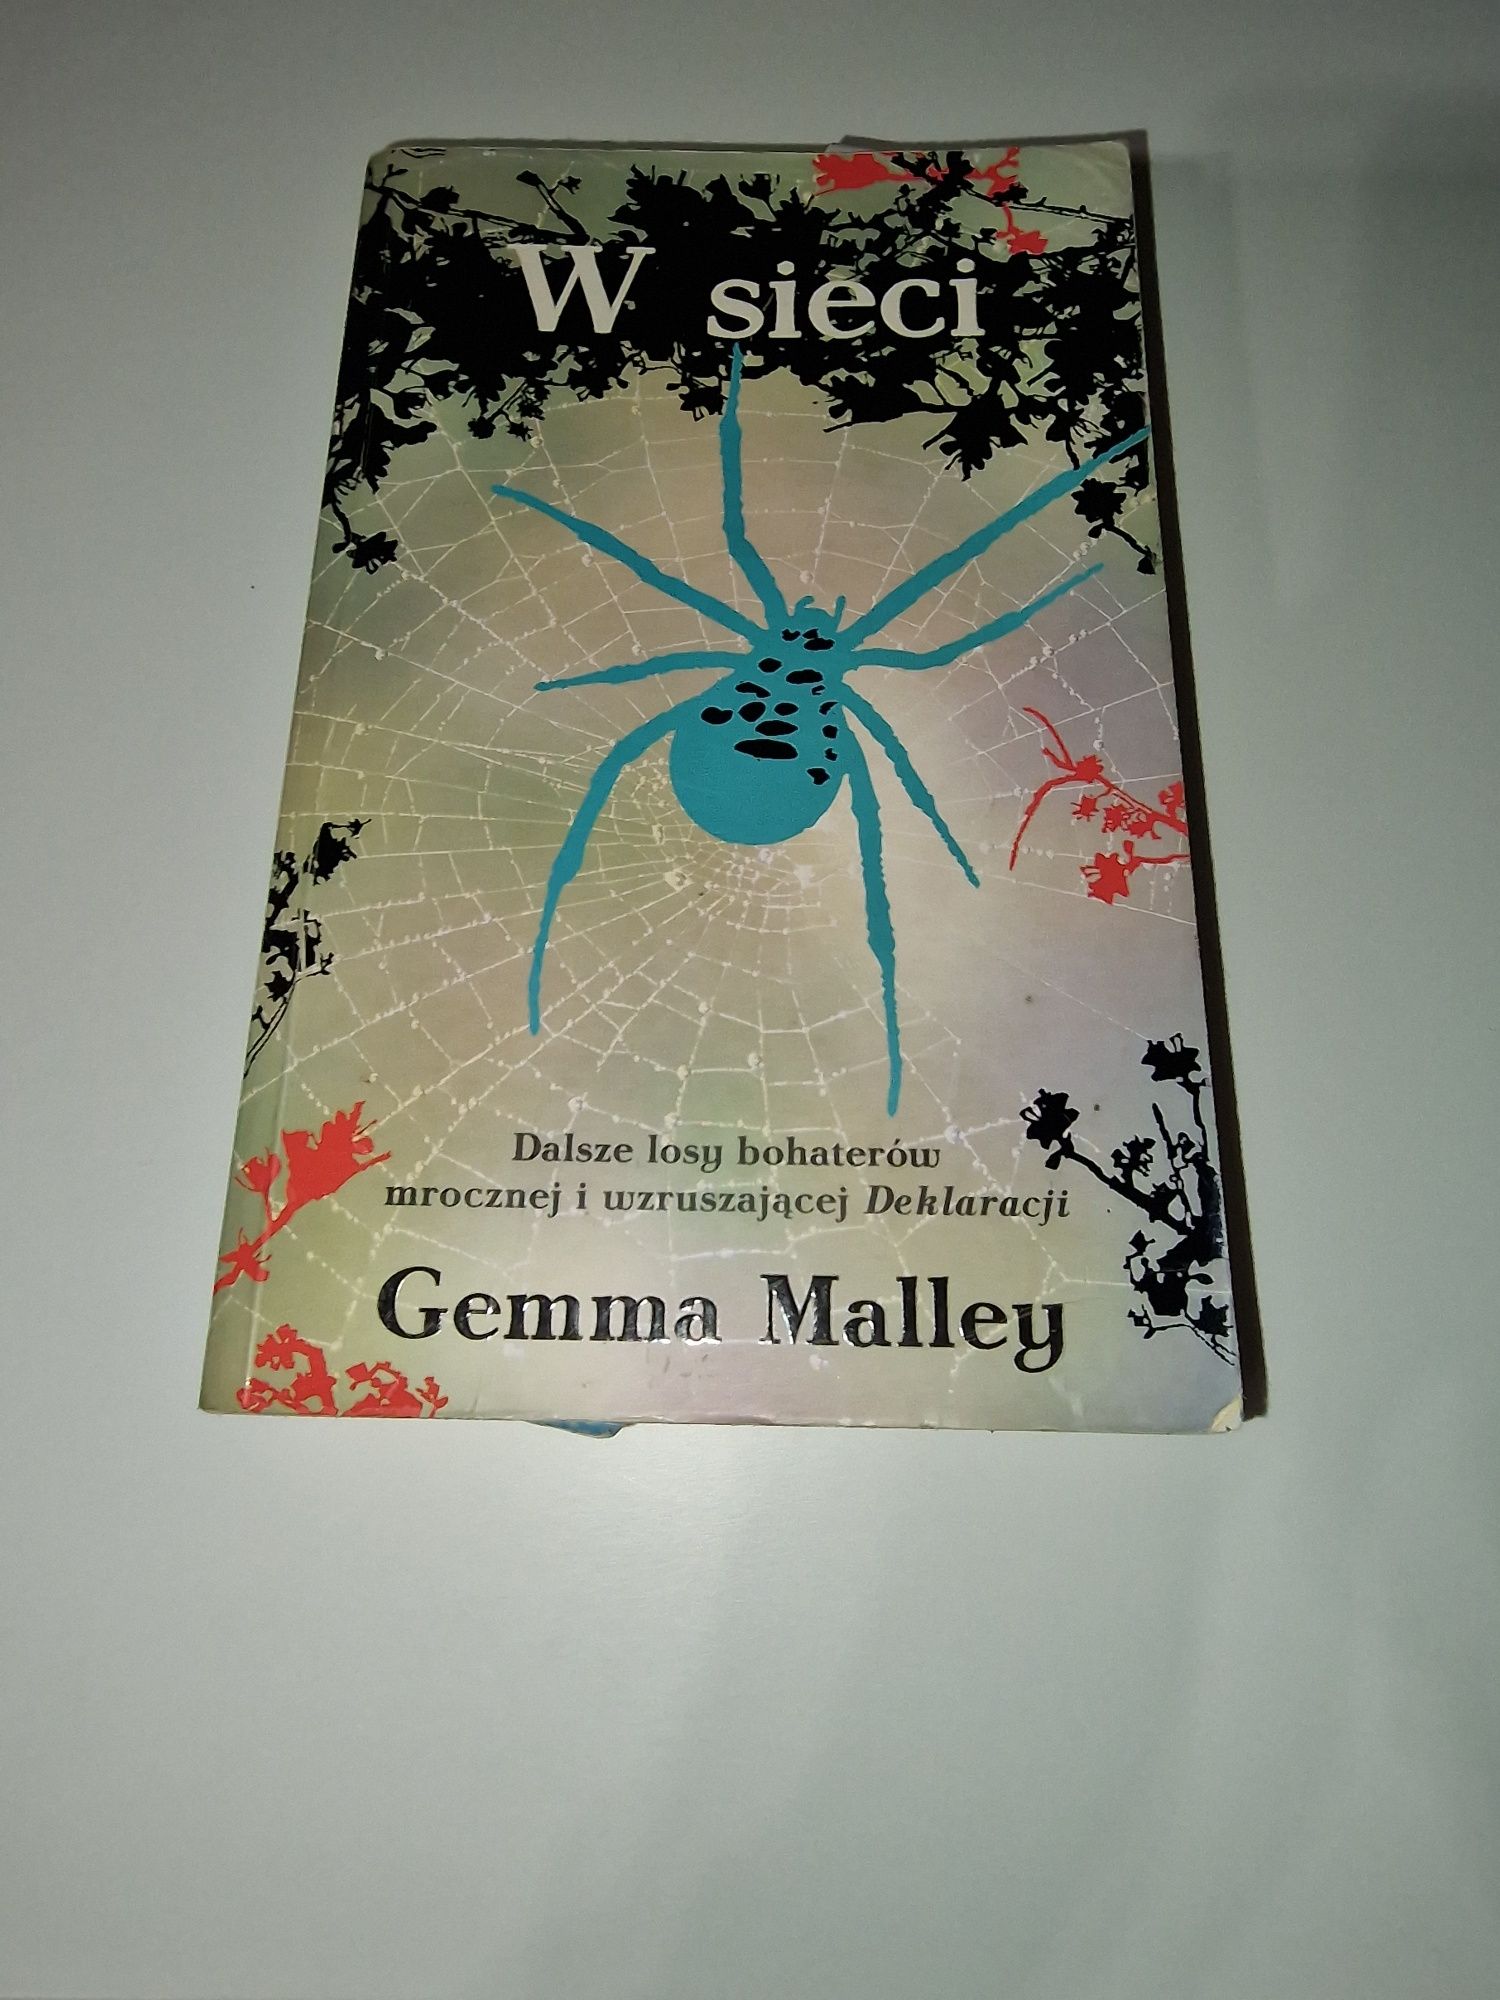 W sieci- Gemma Malley